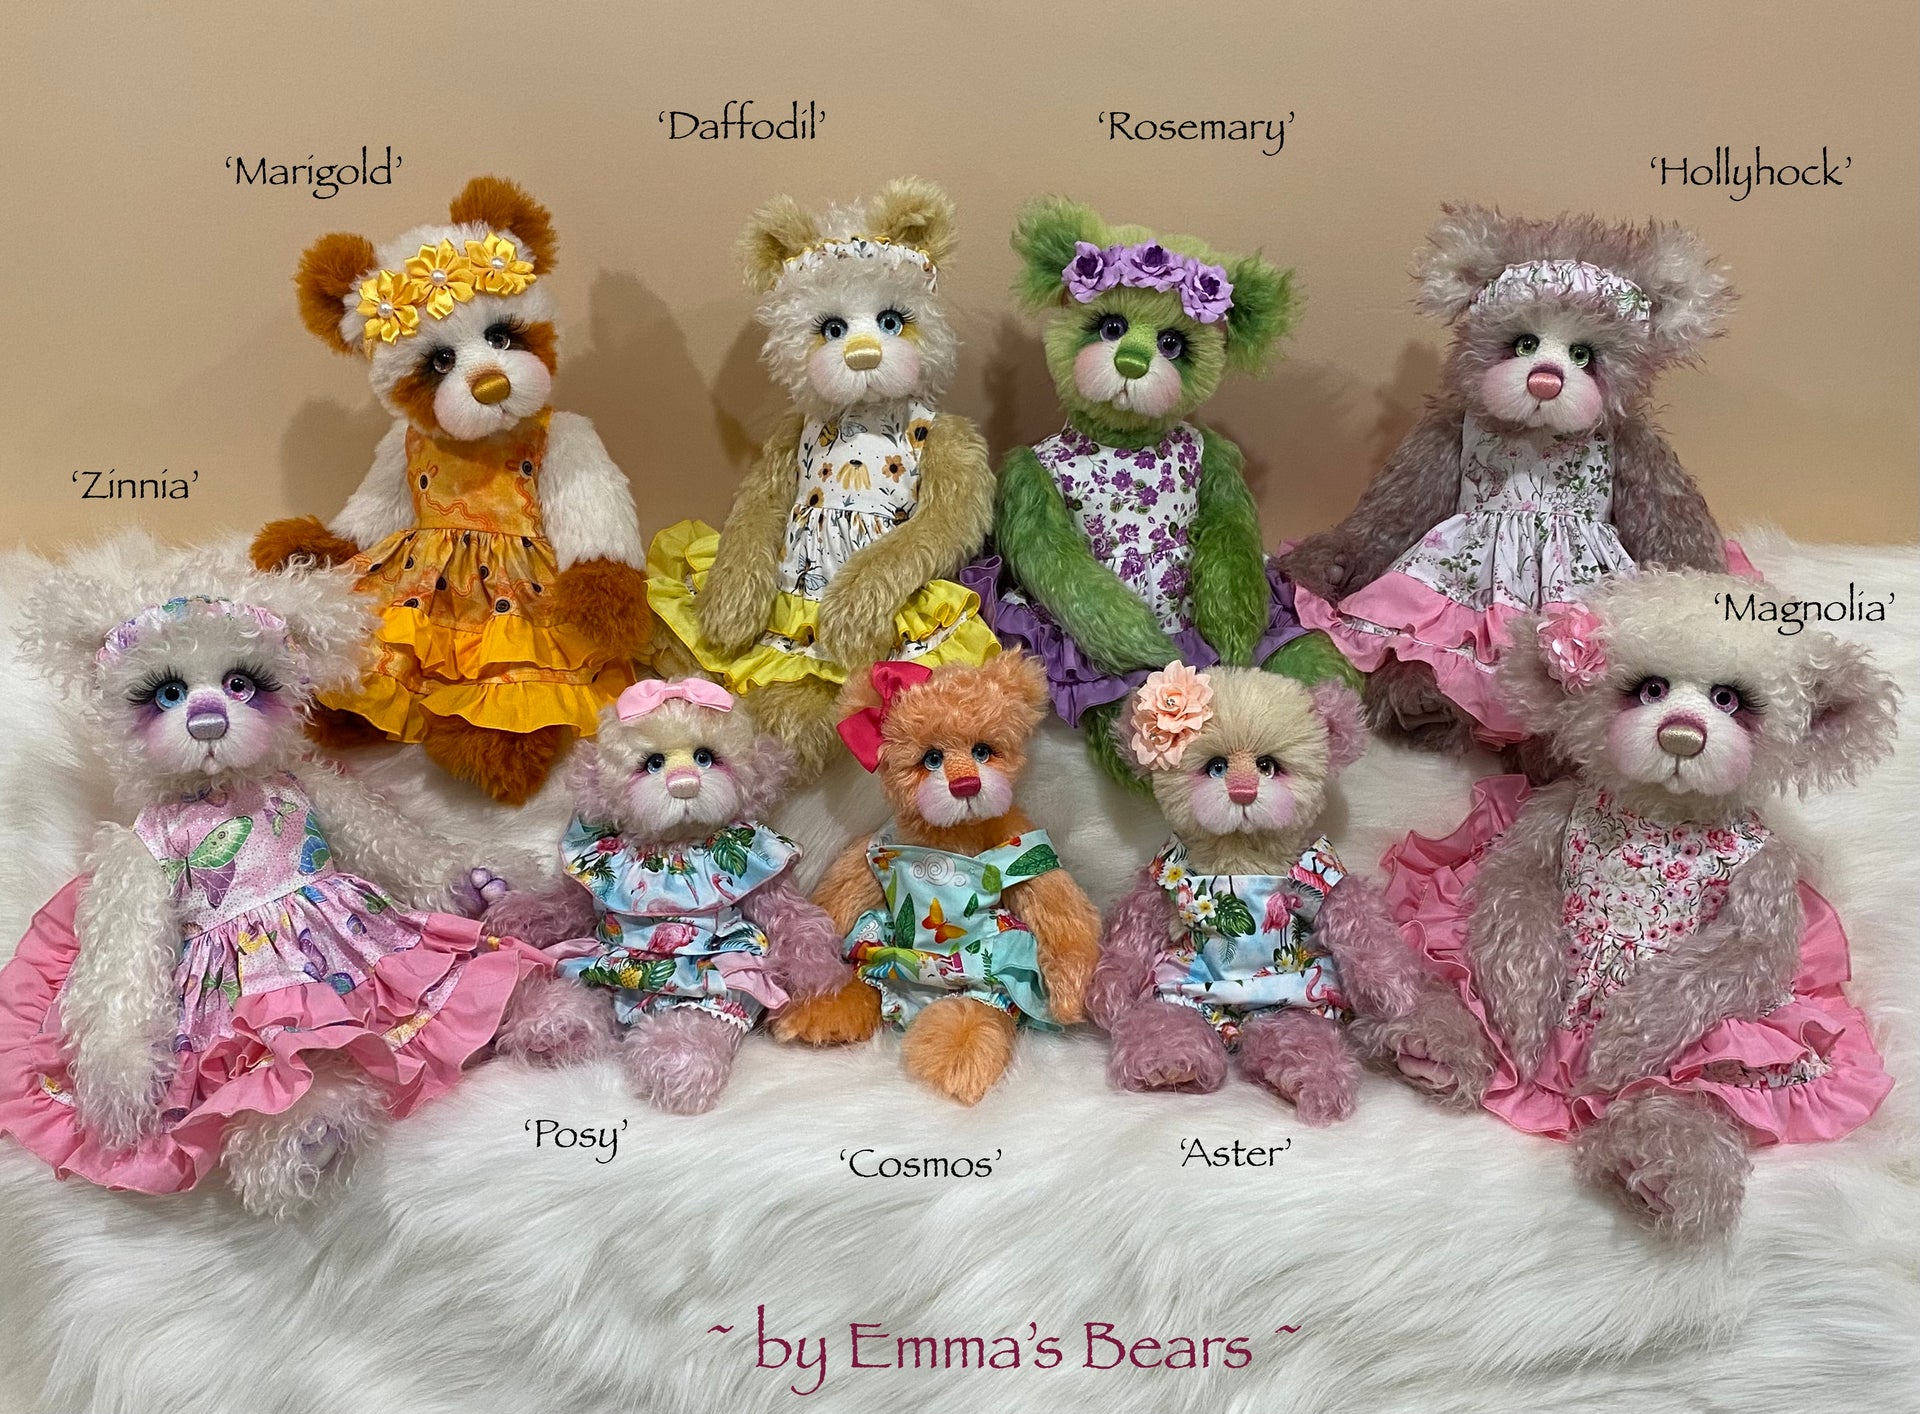 Zinnia - 16" White Curlylocks and Alpaca artist bear by Emma's Bears - OOAK